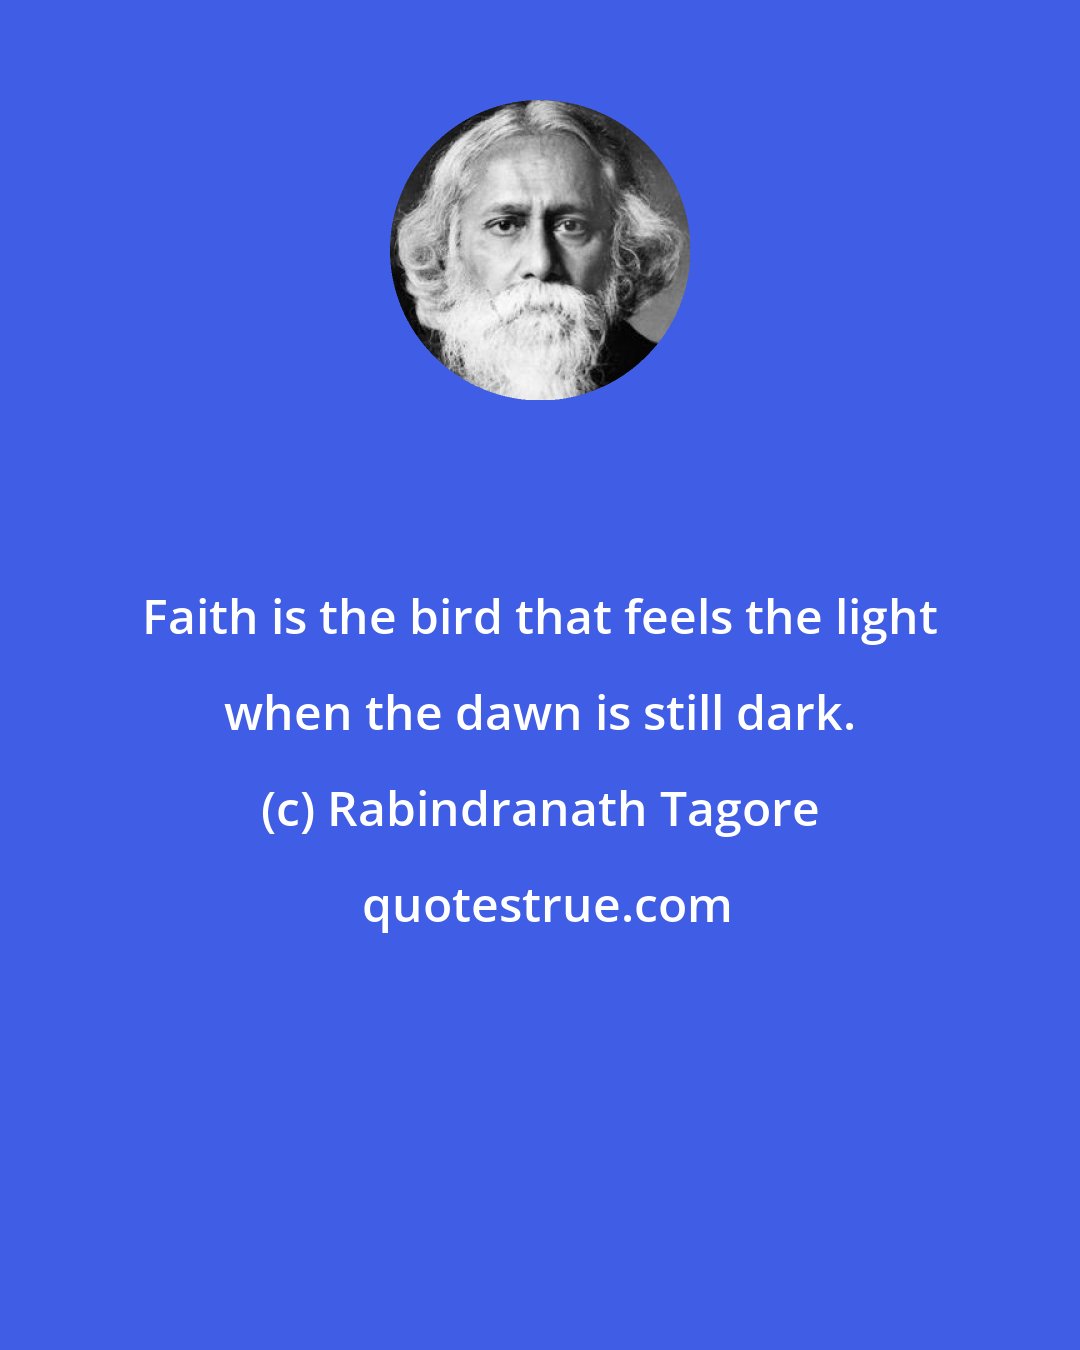 Rabindranath Tagore: Faith is the bird that feels the light when the dawn is still dark.